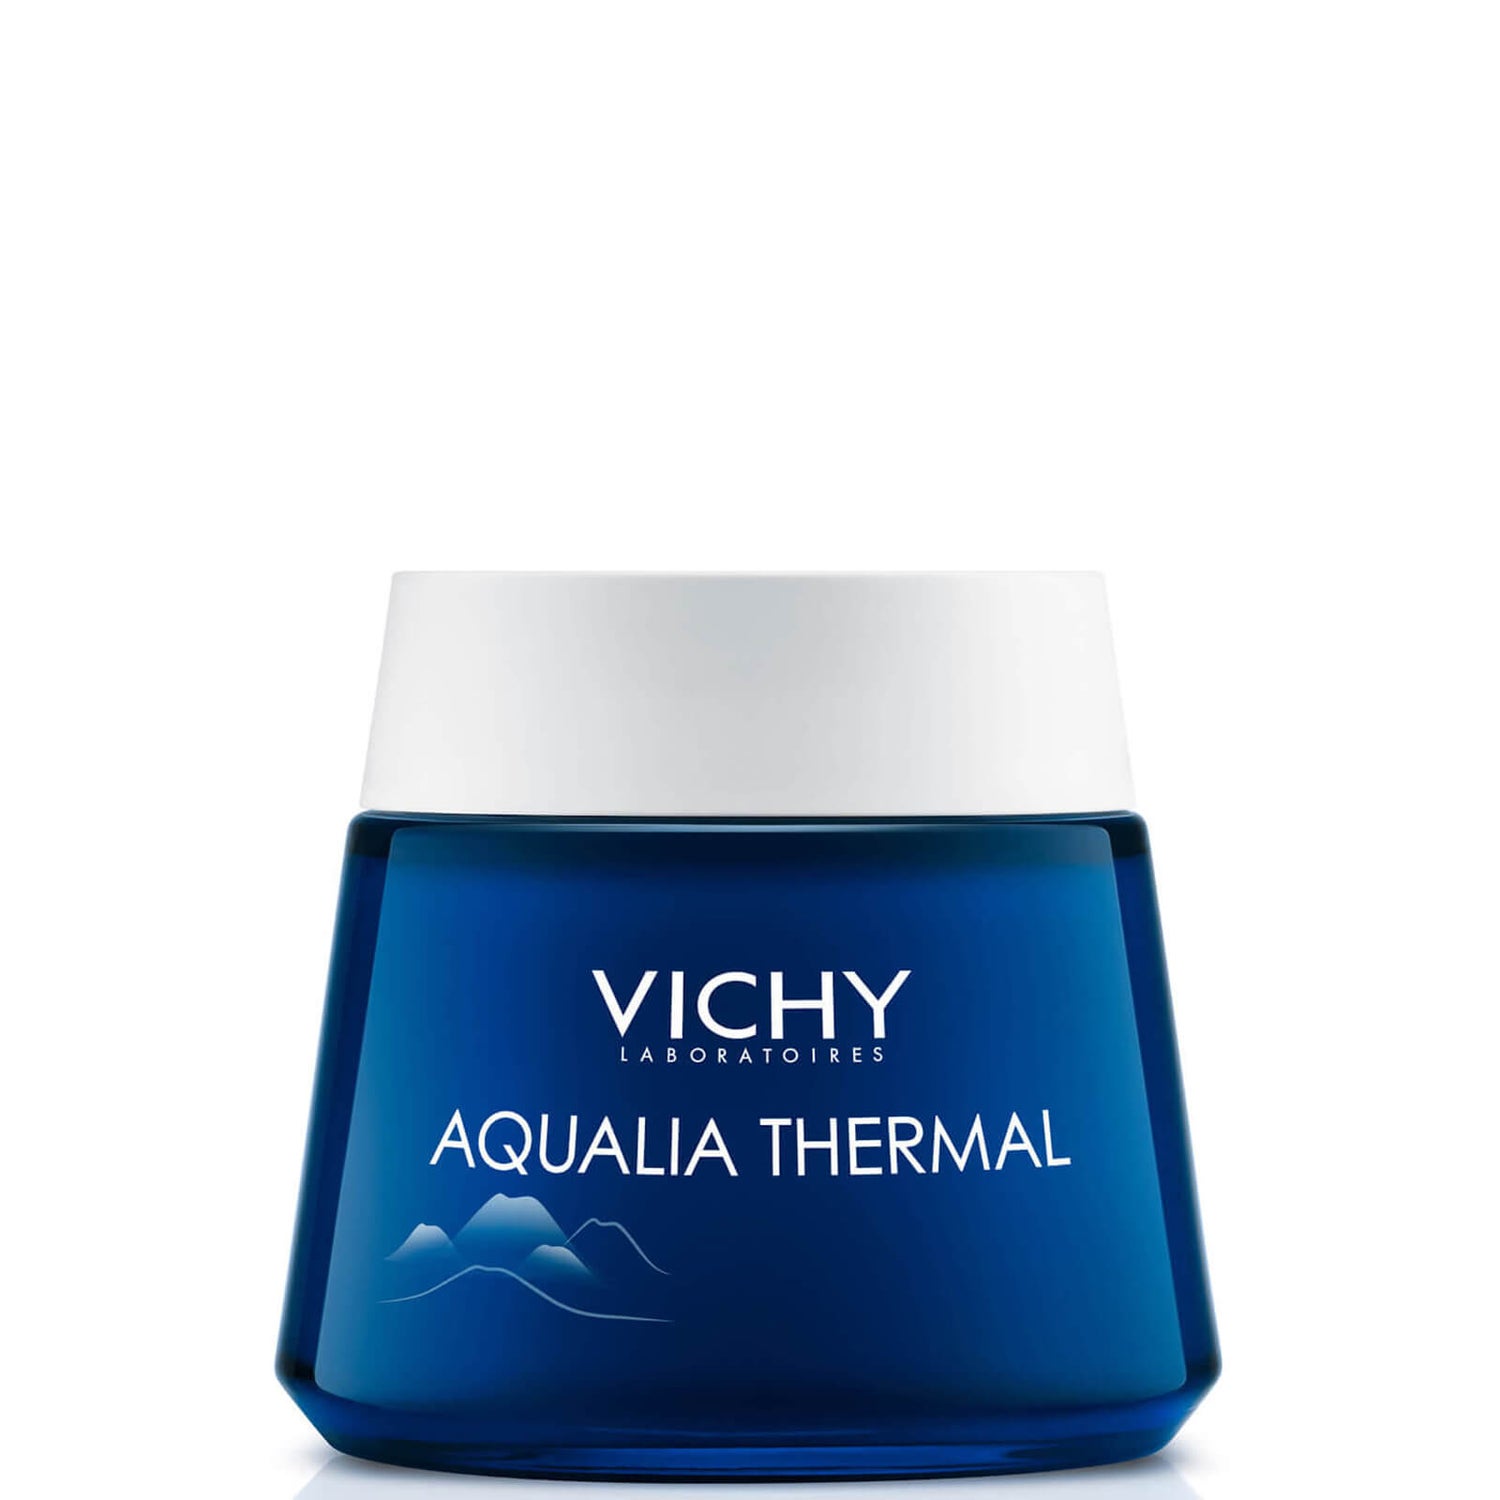 Aqualia Thermal Night Spa de Vichi (75 ml)